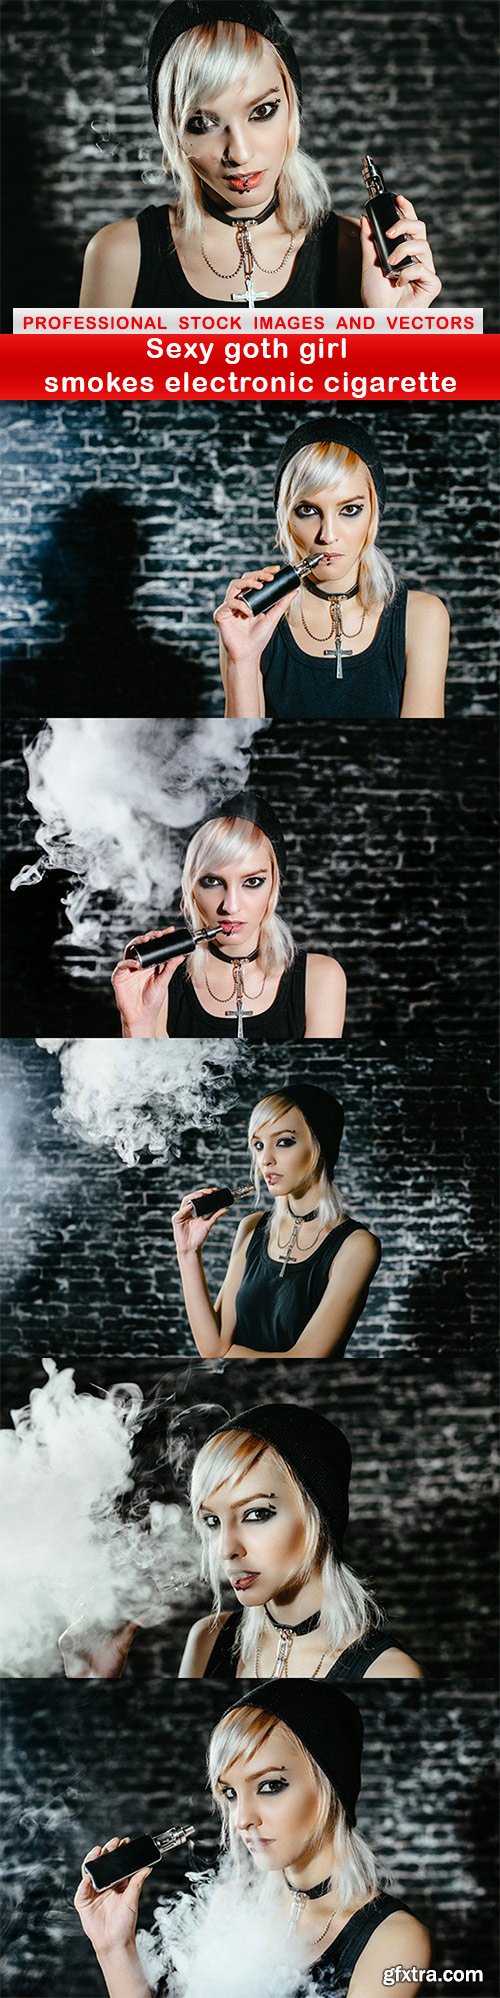 Sexy goth girl smokes electronic cigarette - 6 UHQ JPEG